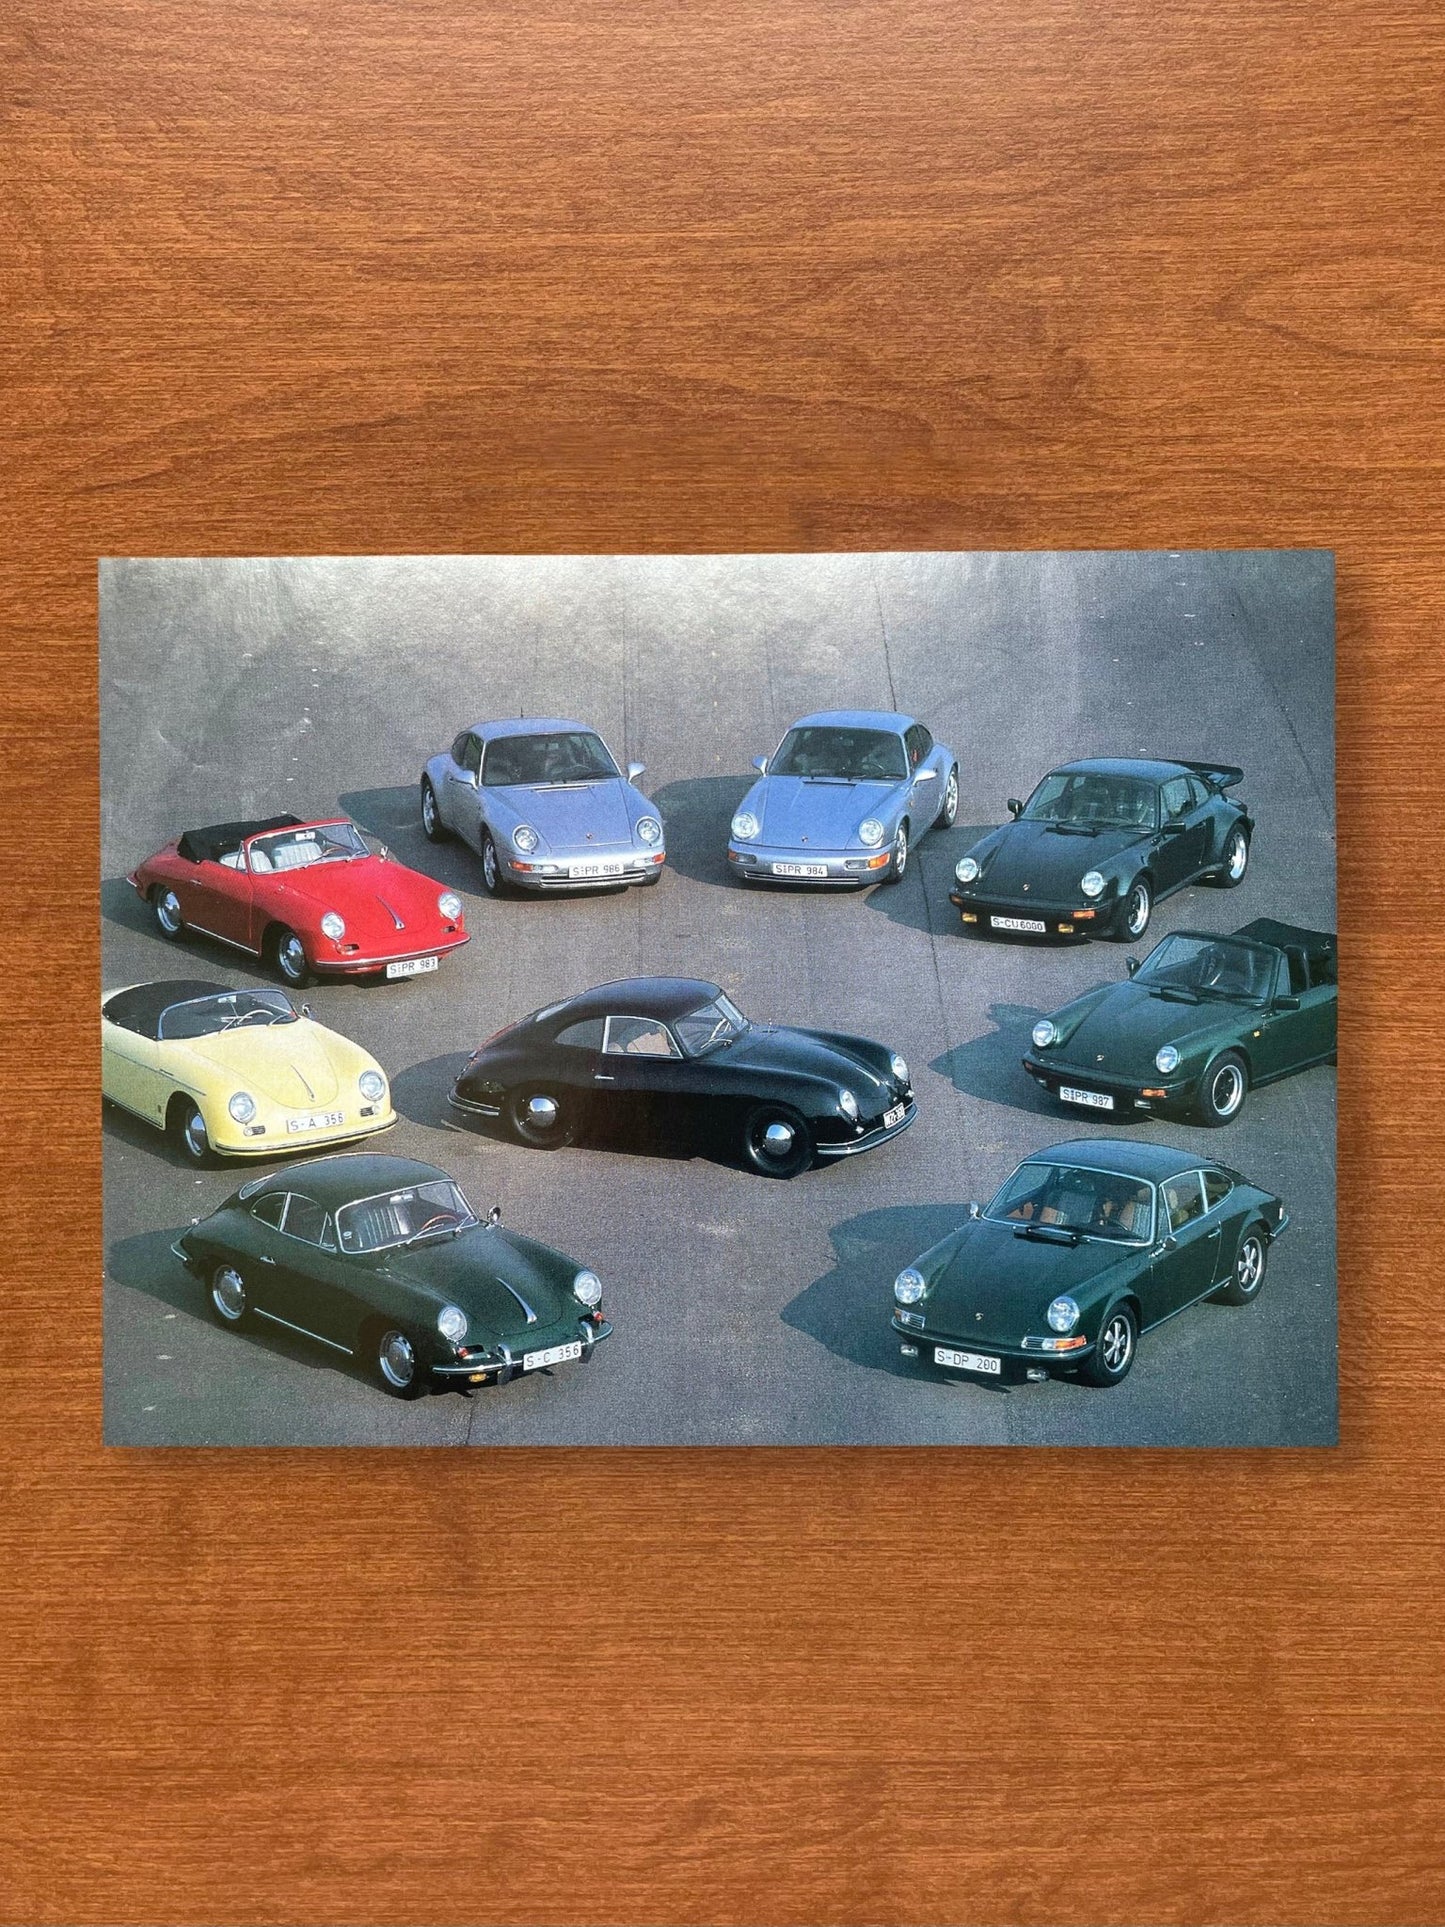 1998 "Porsches in parking lot" photograph Advertisement